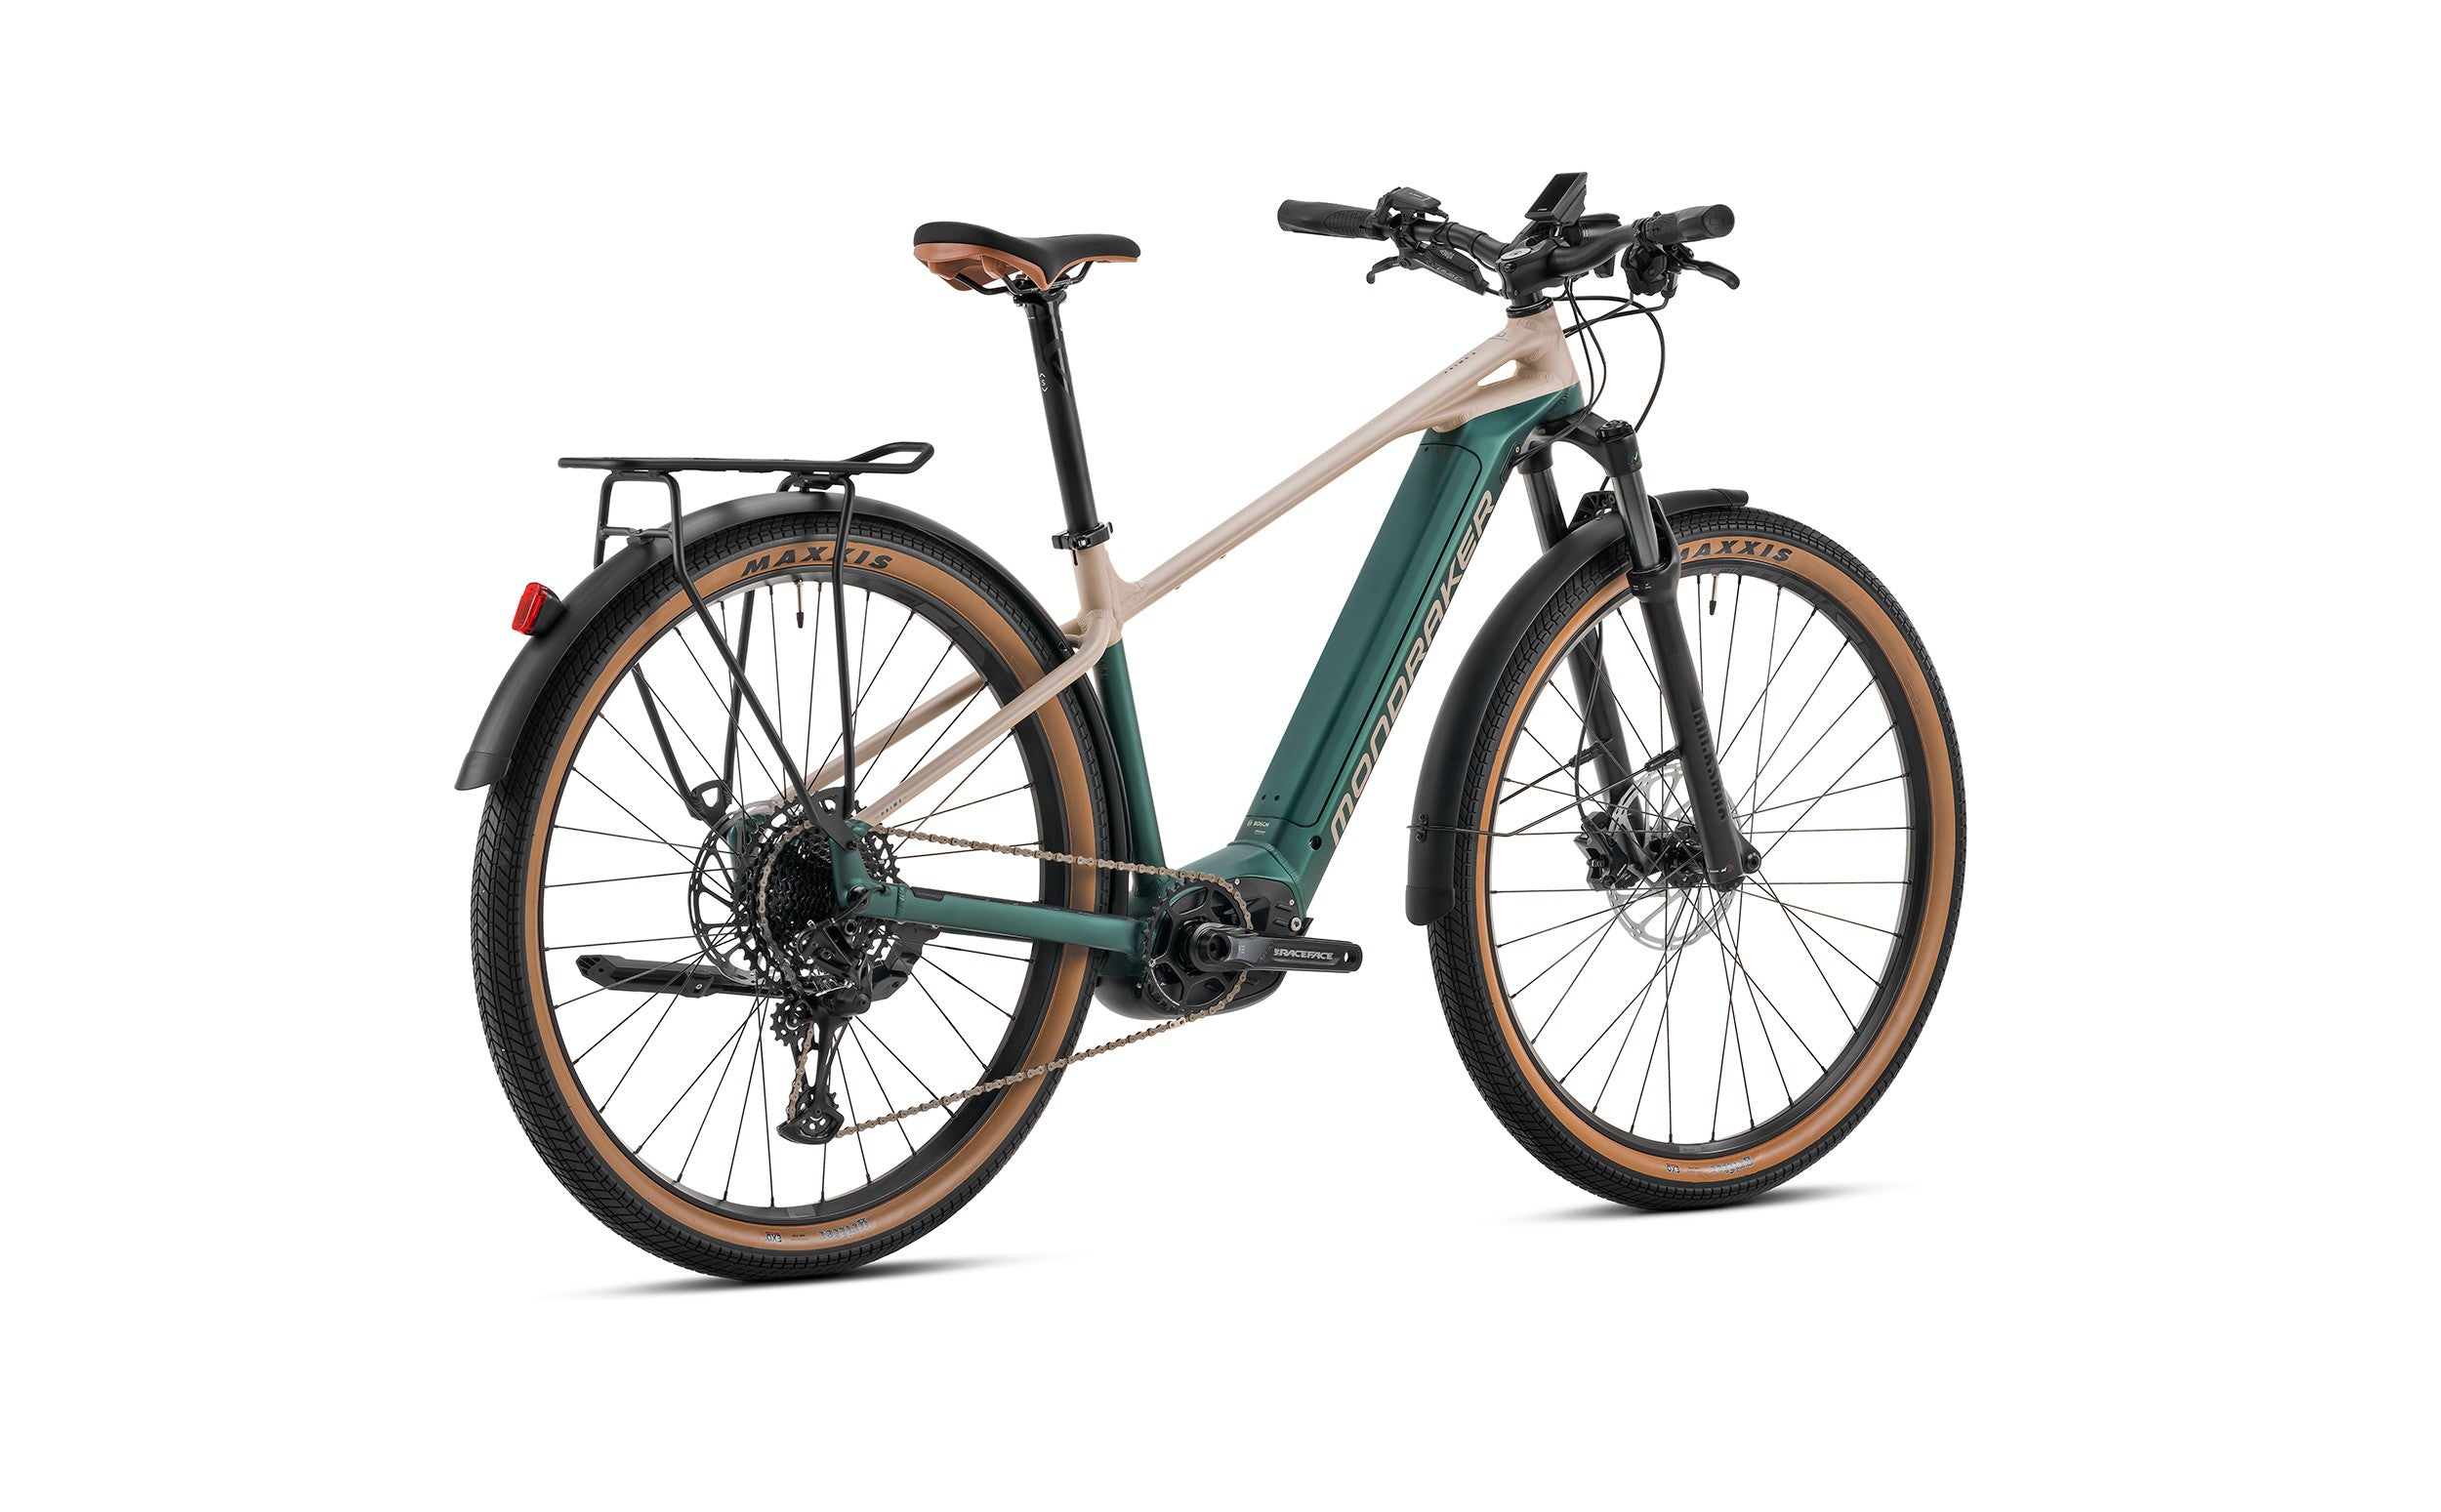 Mondraker Prime X green-grey - Premium Bikeshop